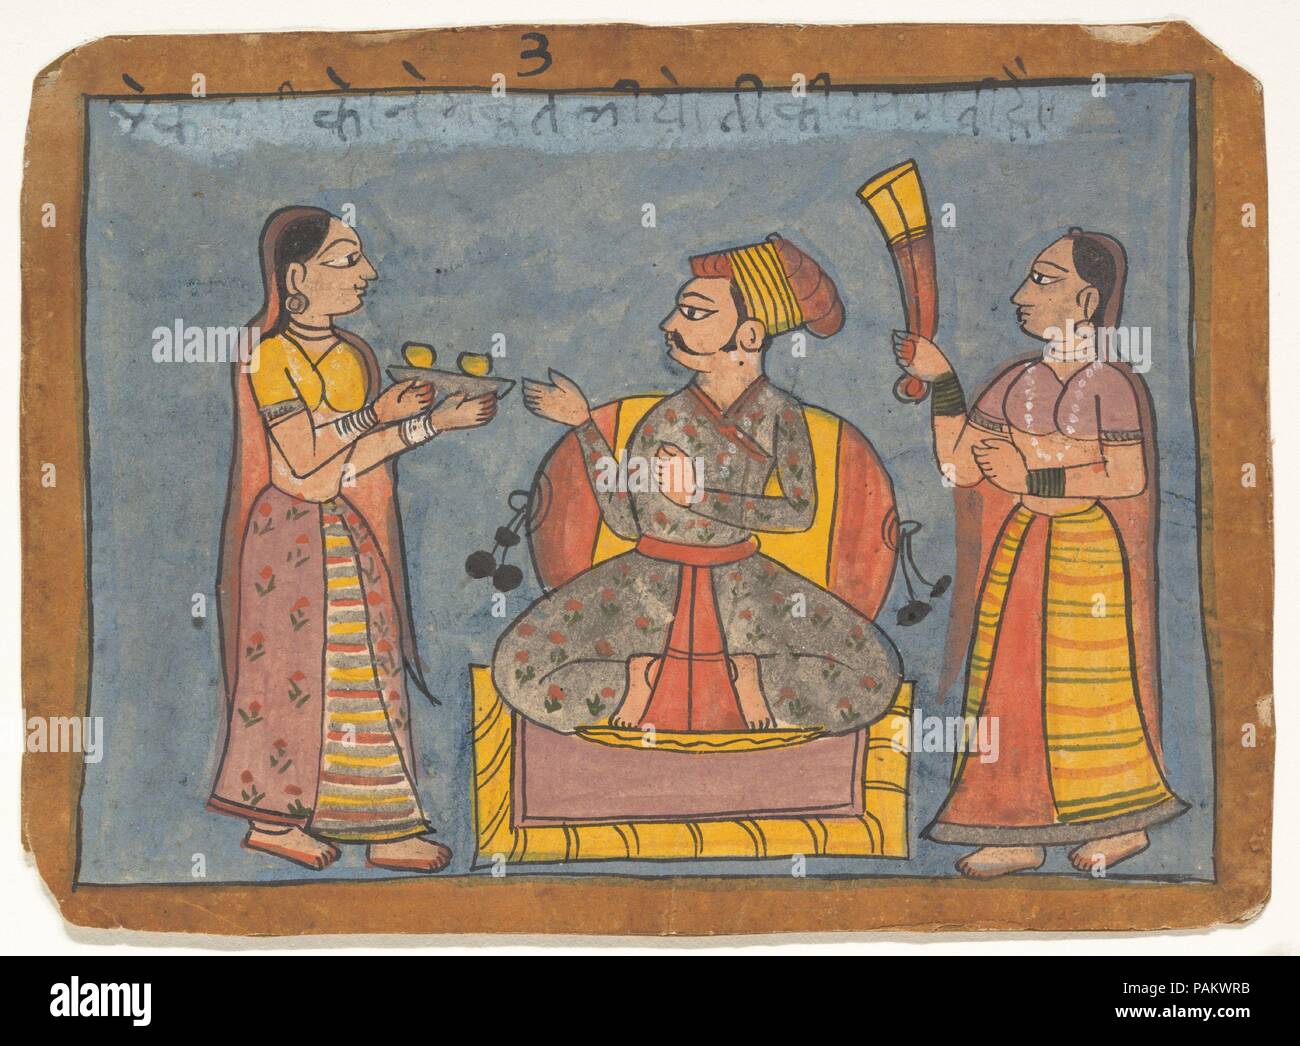 Folk Malerei. Kultur: Indien (rajasthan, Marwar). Abmessungen: 7 7/8 x 5 11/16 in. (20,0 x 14,4 cm). Datum: 1725. Museum: Metropolitan Museum of Art, New York, USA. Stockfoto